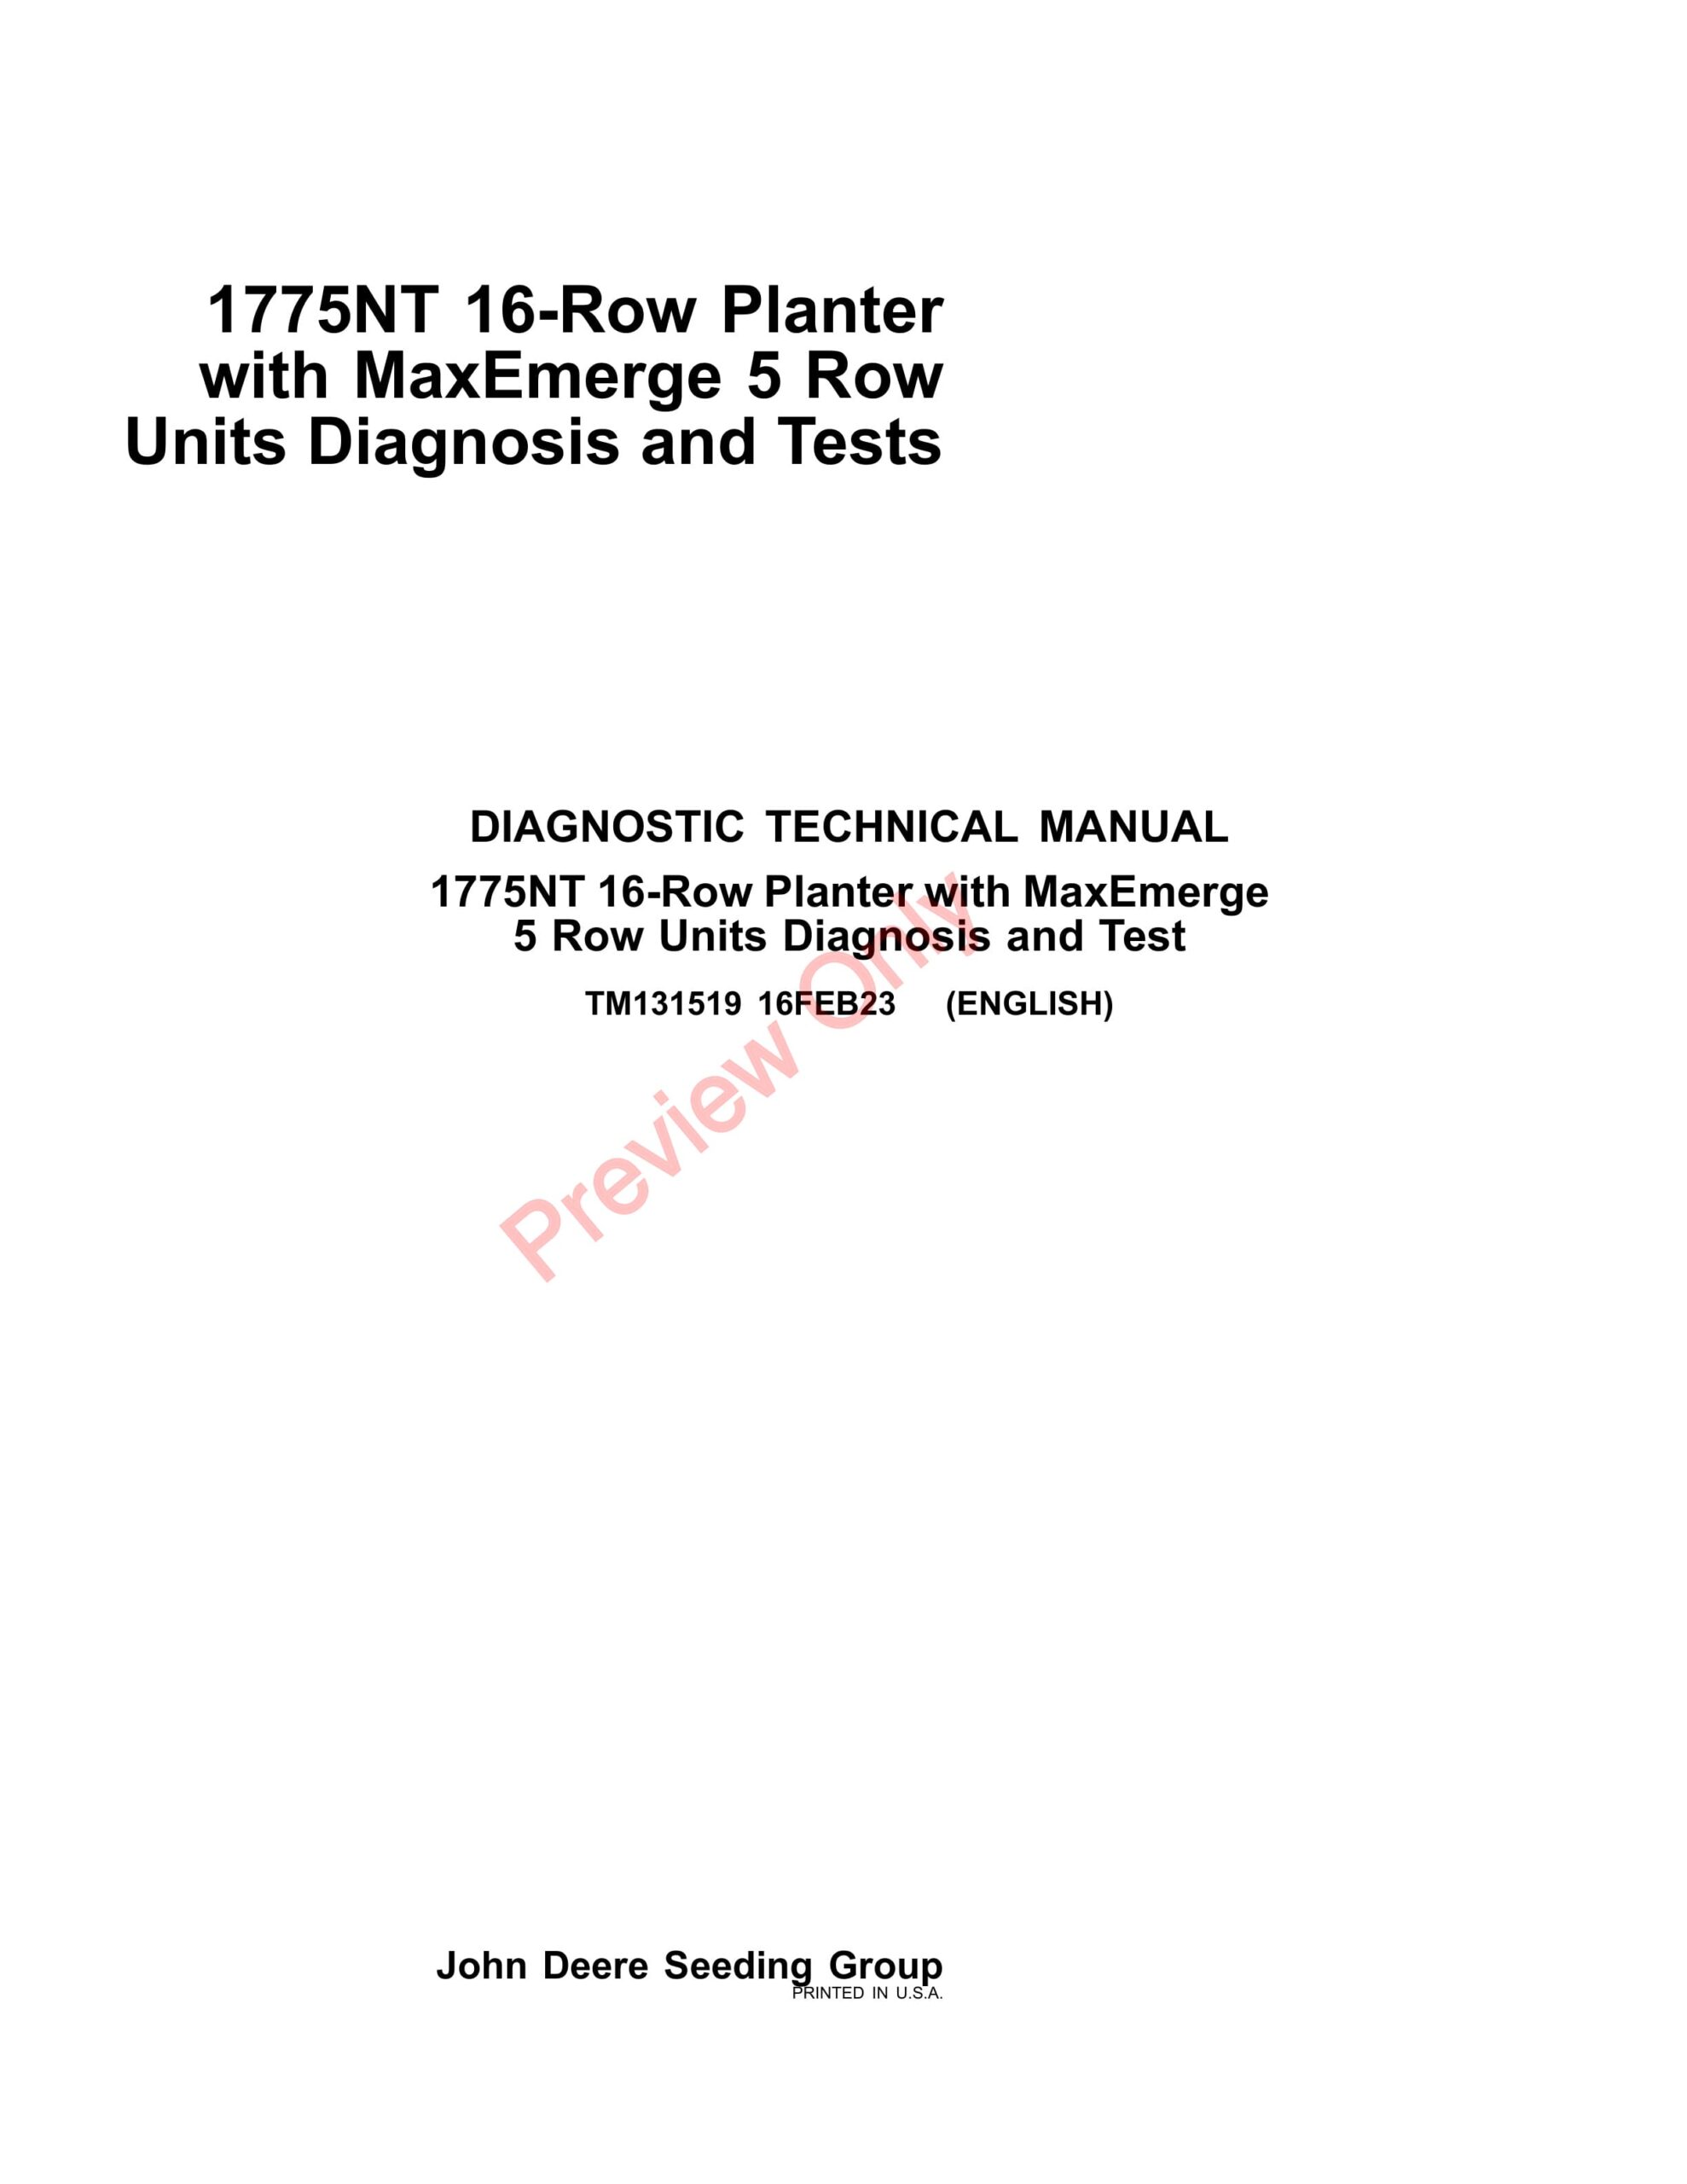 John Deere 1775NT (16-Row) Planters wMaxEmerge 5 Row Units Diagnostic Technical Manual TM131519 16FEB23-1